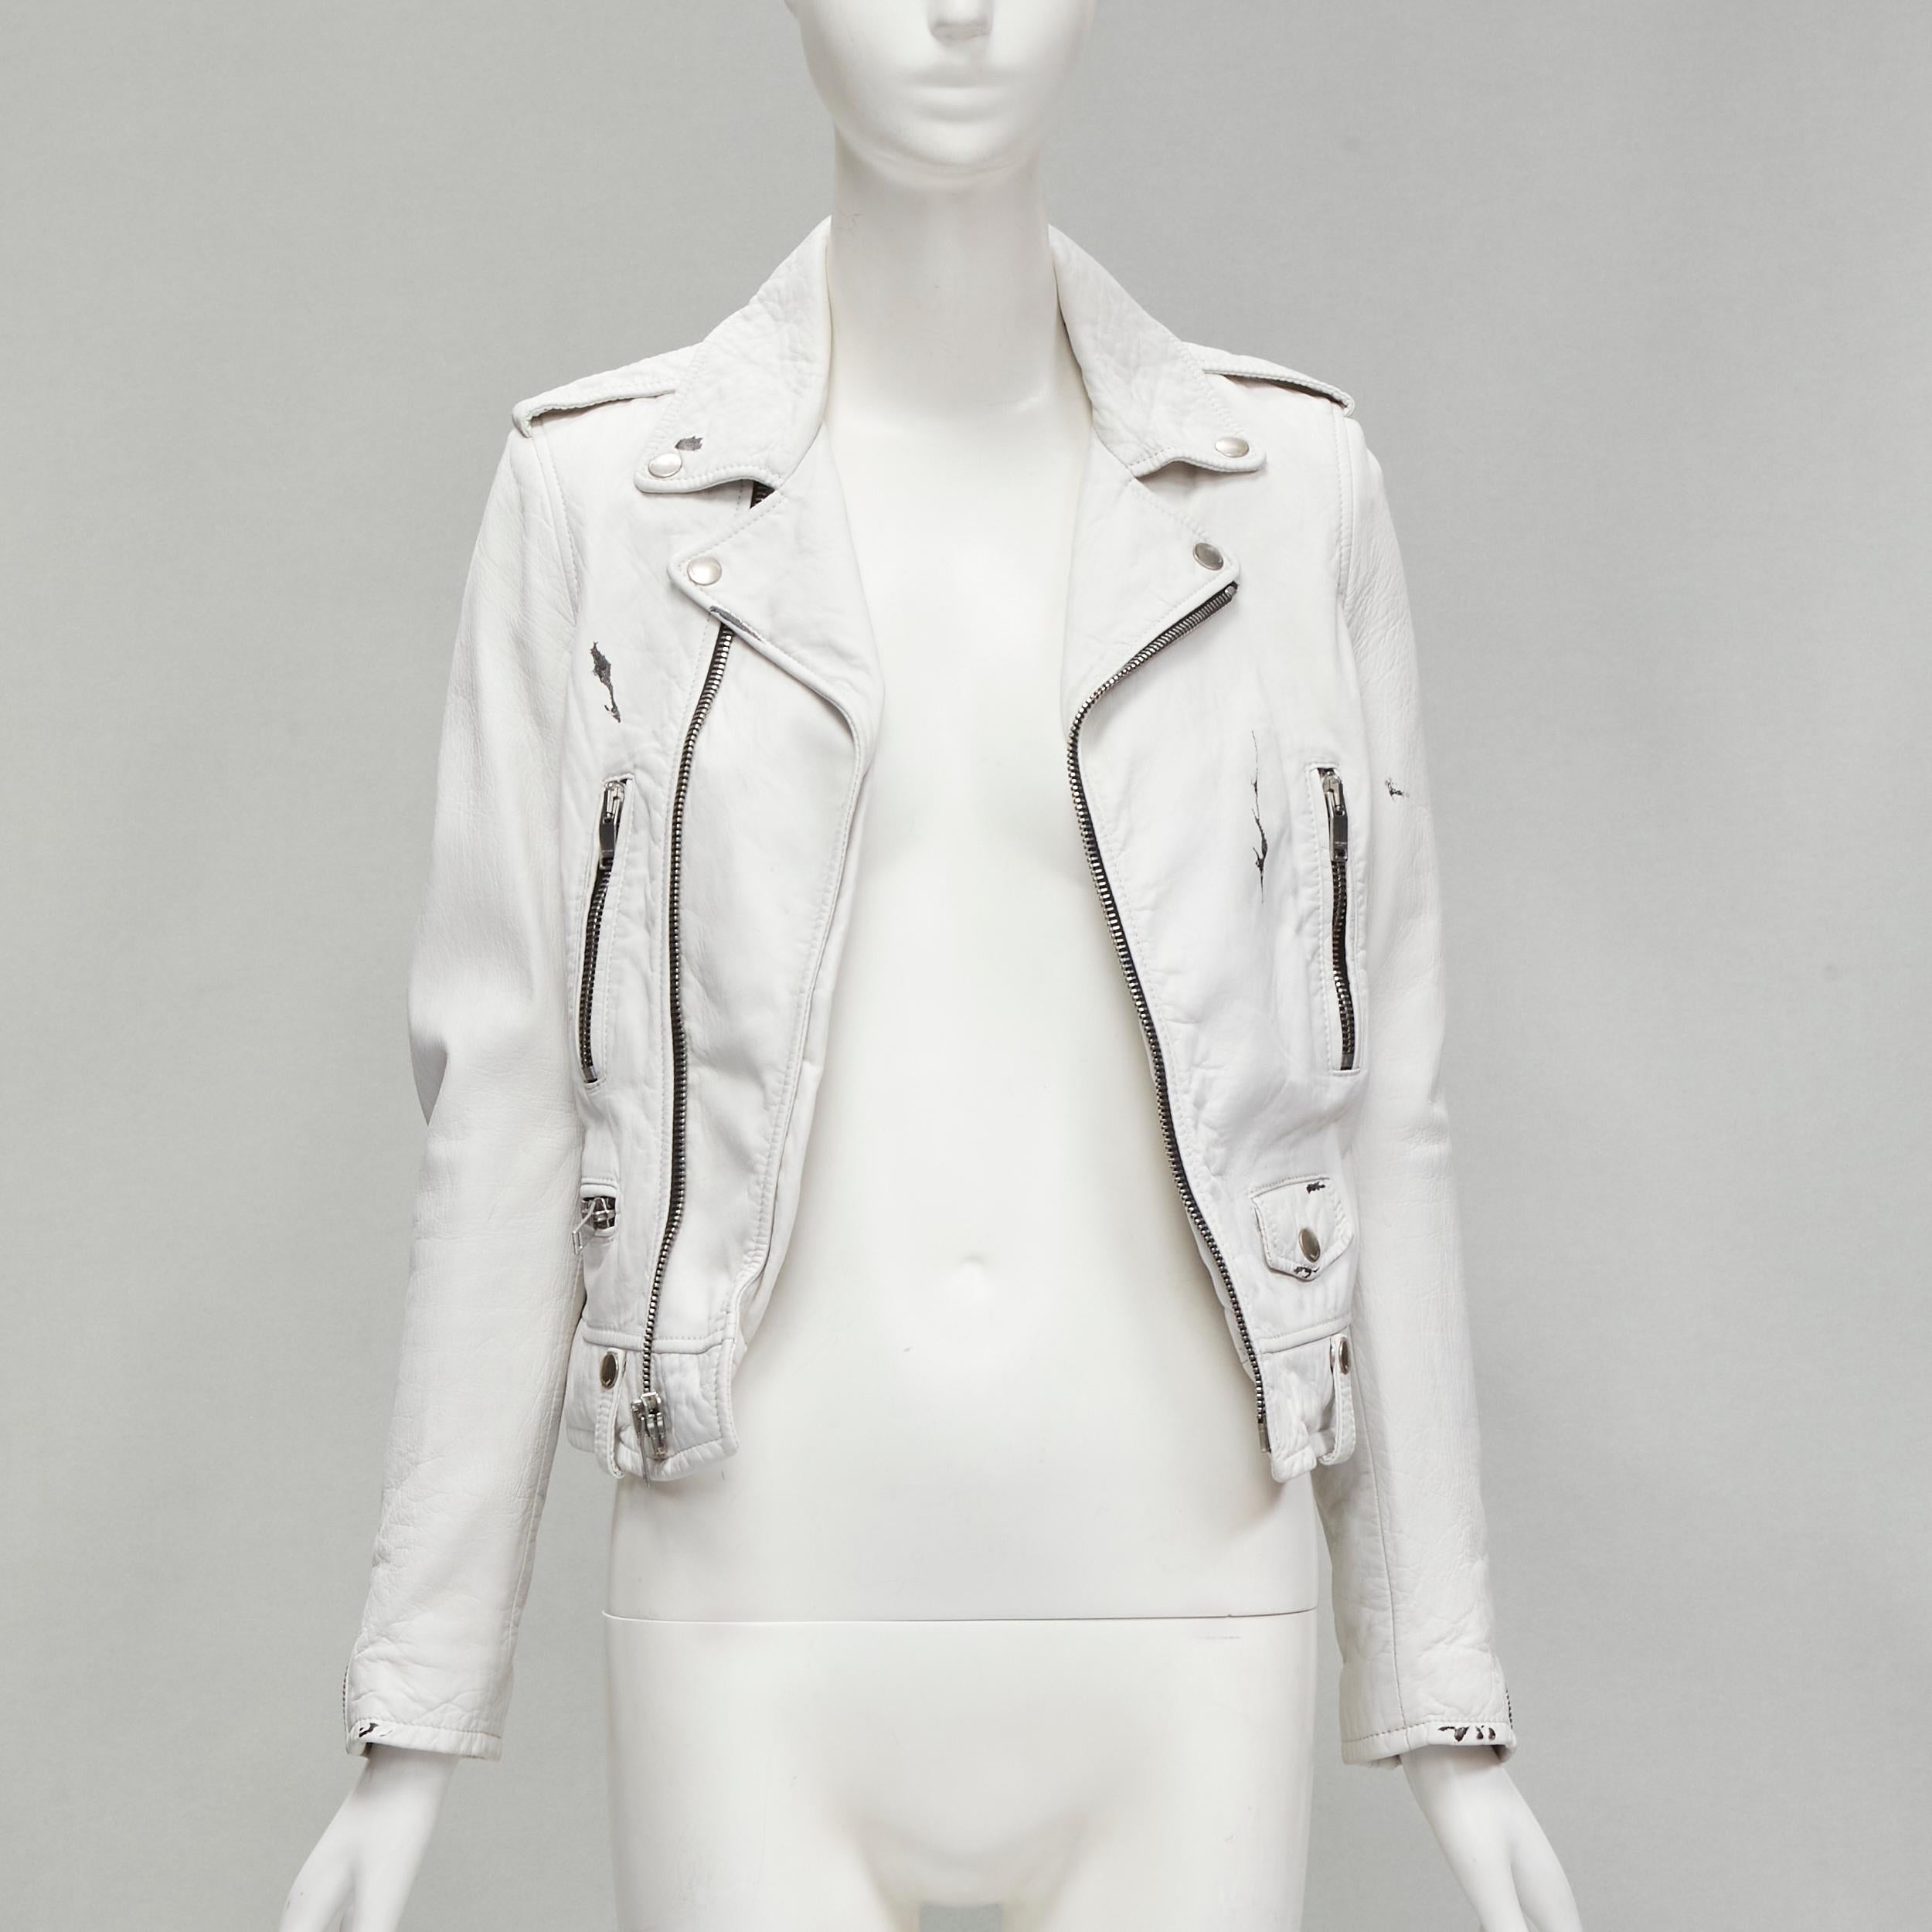 Gray SAINT LAURENT Hedi Slimane 2015 white lambskin leather distressed biker FR36 S For Sale